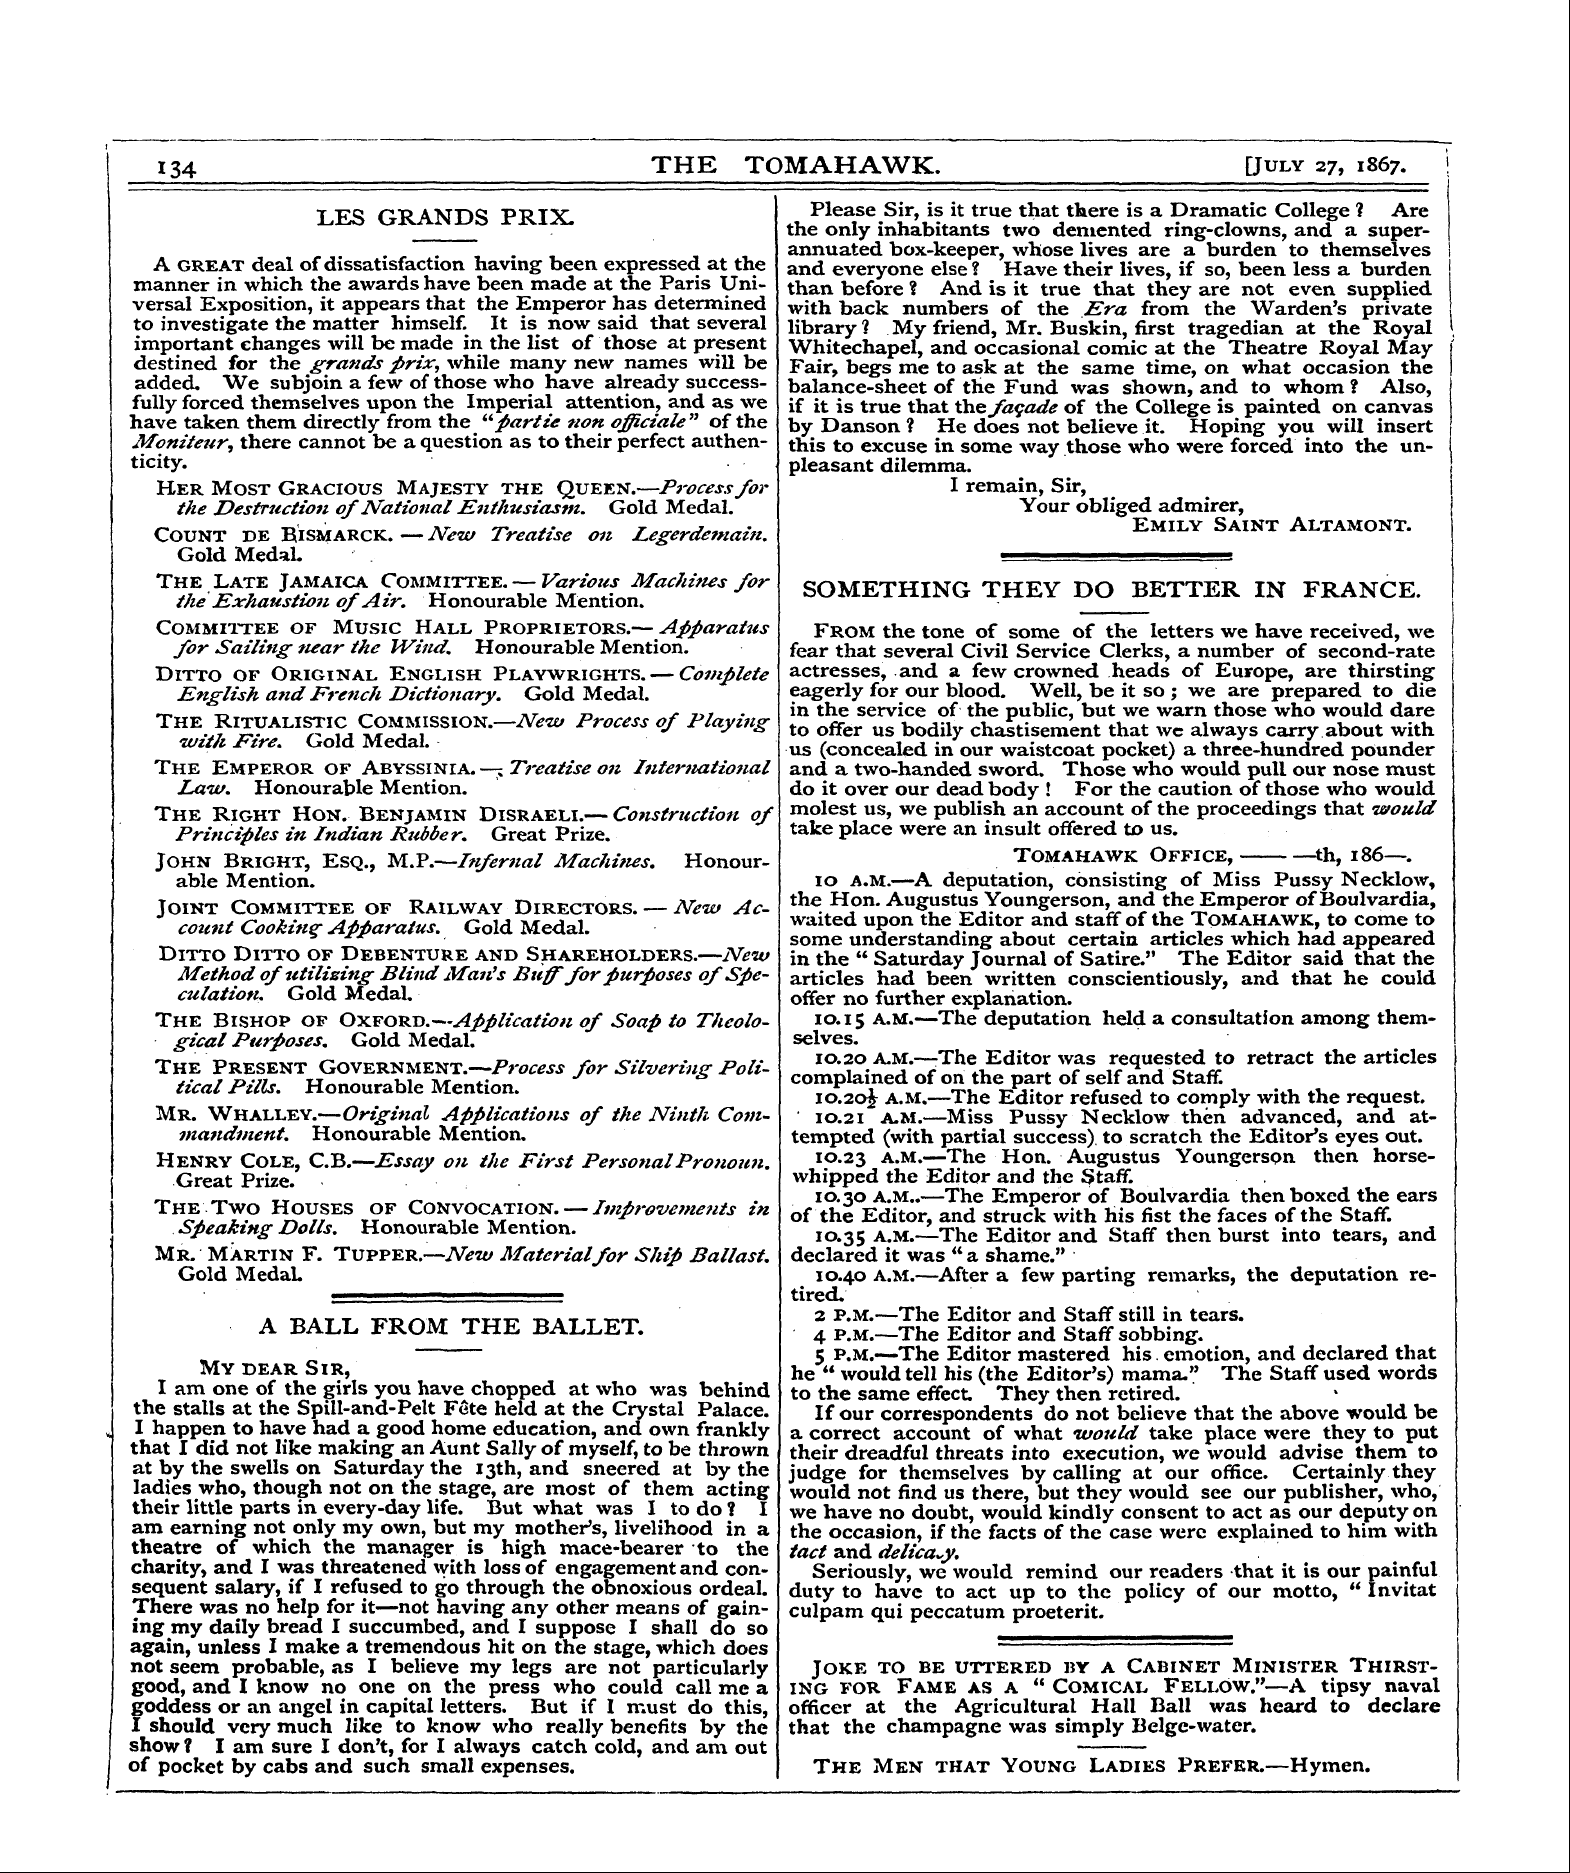 Tomahawk (1867-1870): jS F Y, 1st edition - 134 The Tomahawk. [July 27, 1867. J